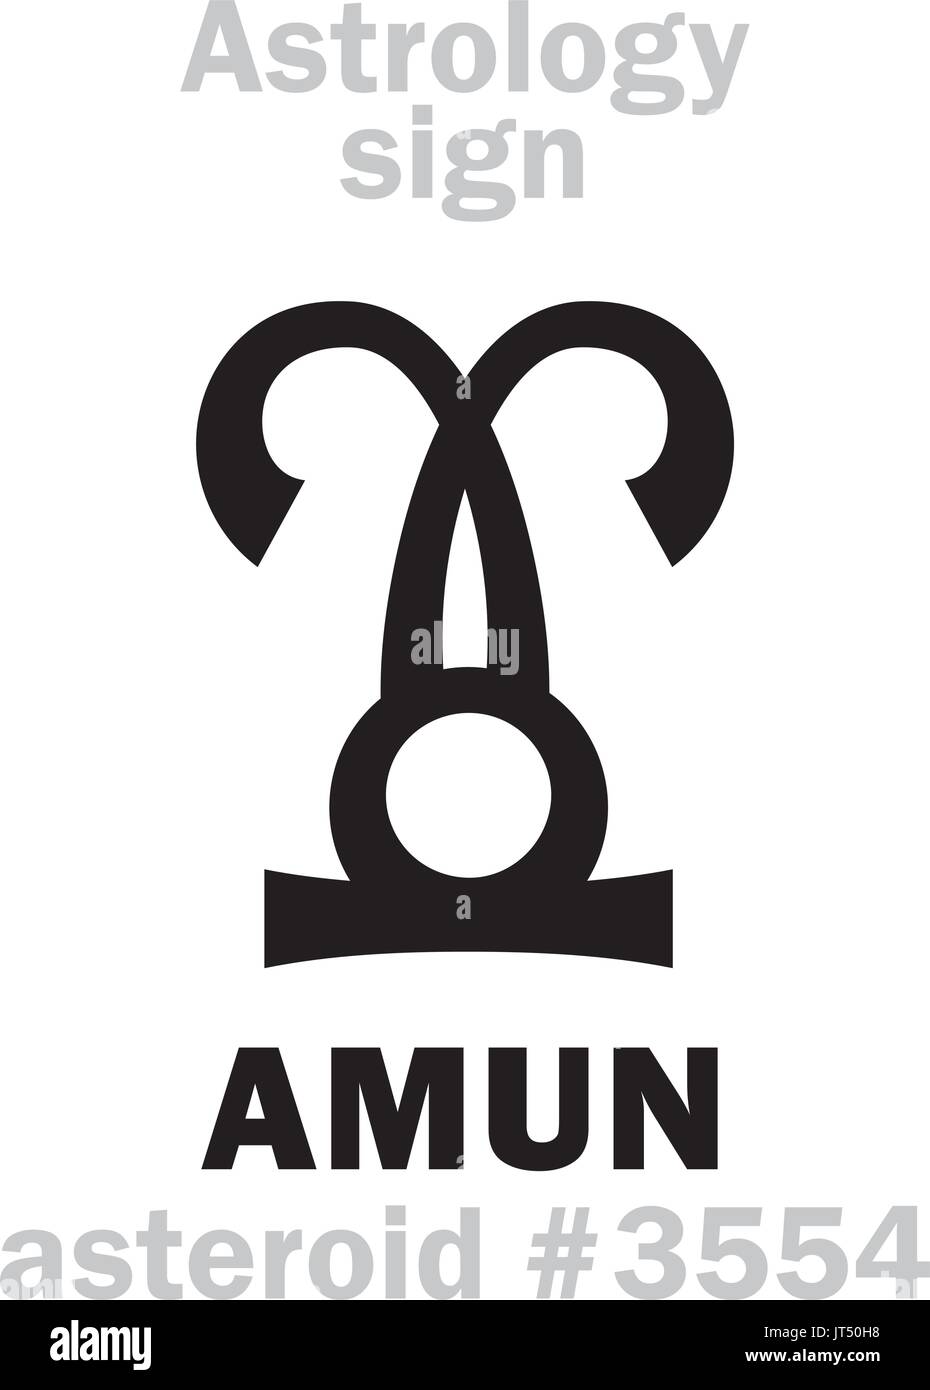 Astrology Alphabet: AMUN, asteroid #3554. Hieroglyphics character sign (single symbol). Stock Vector